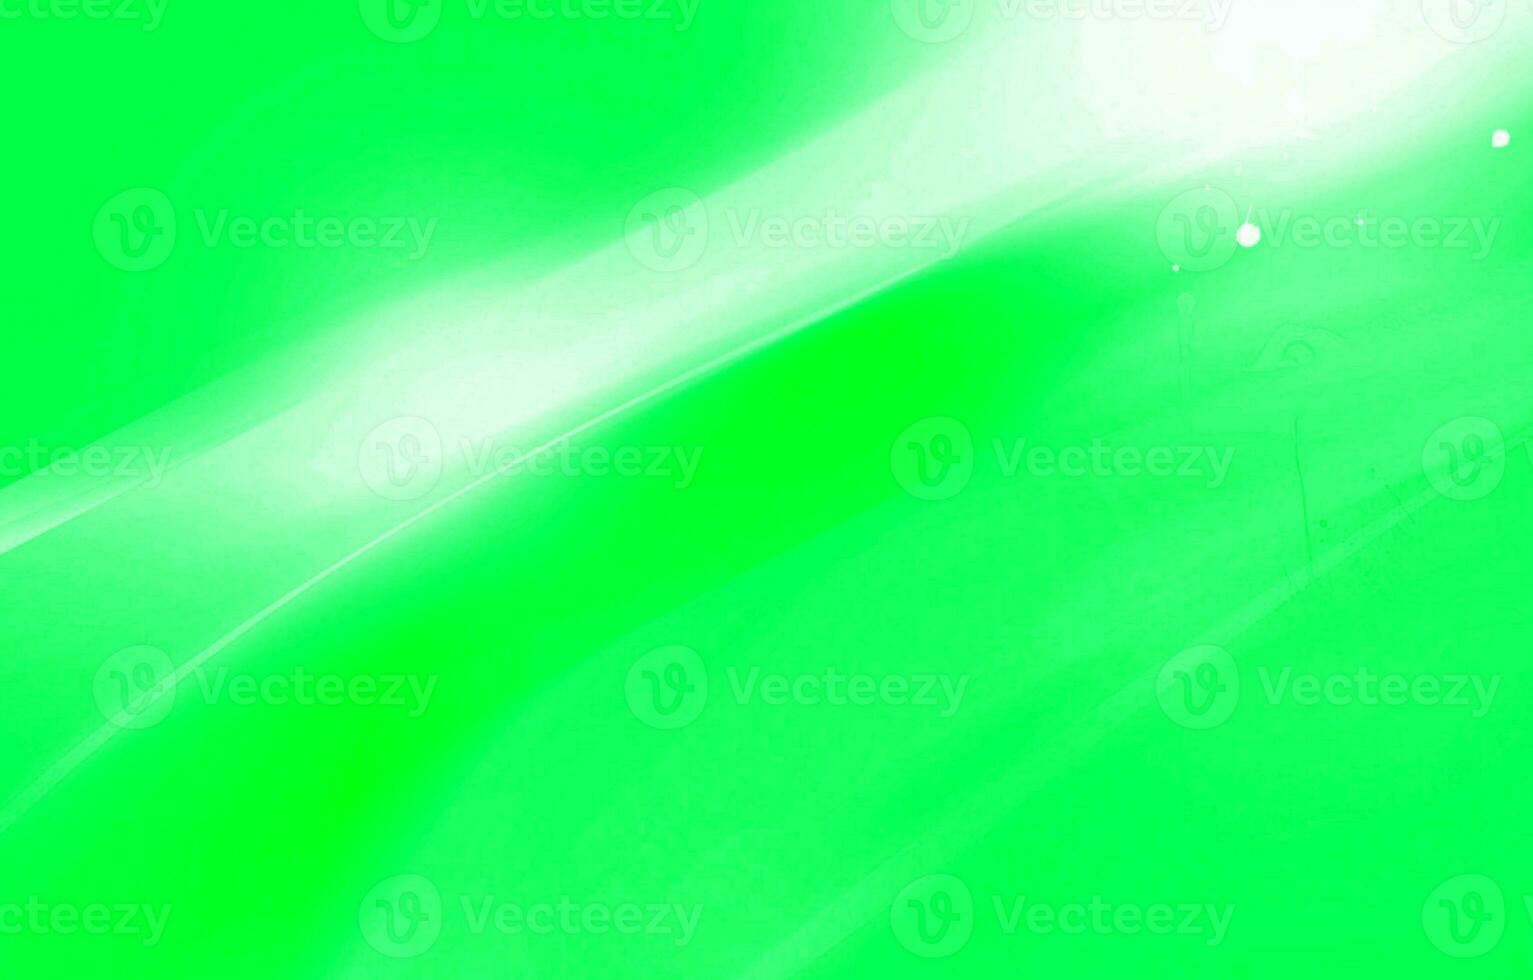 ligero verde textura resumen antecedentes foto